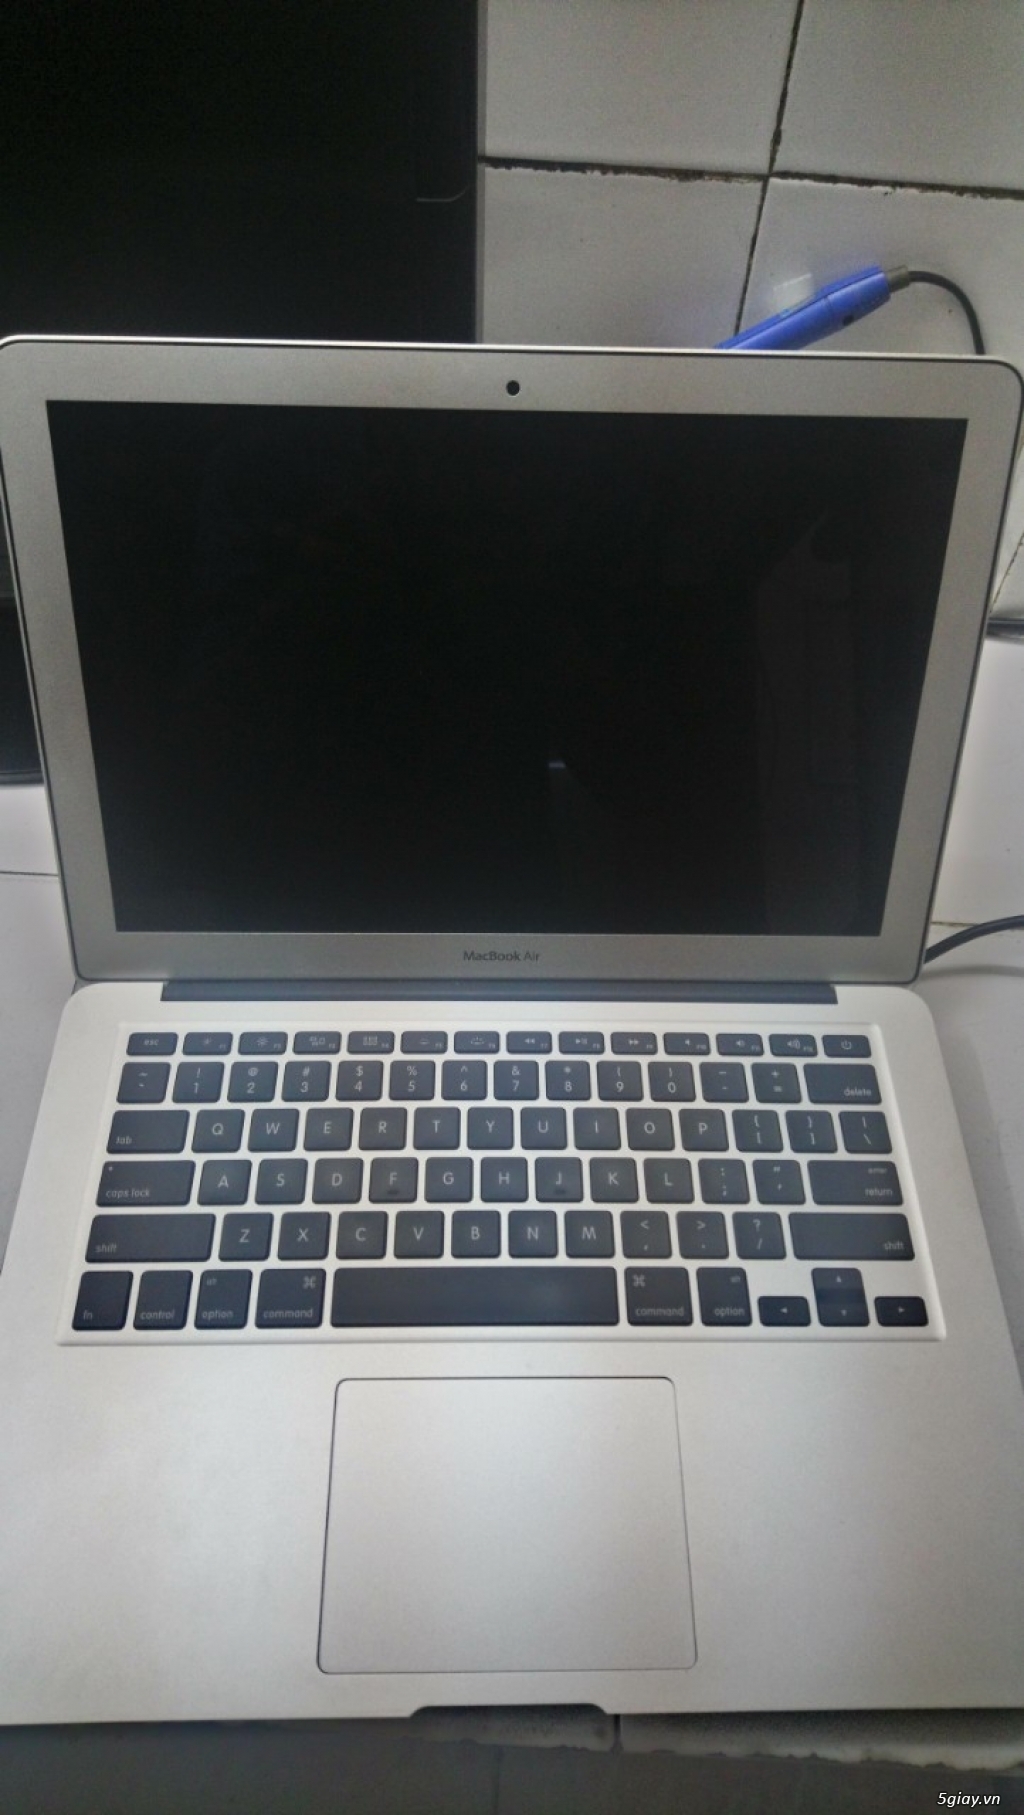 Cần bán Macbook Air 2014 giá rẻ - 24